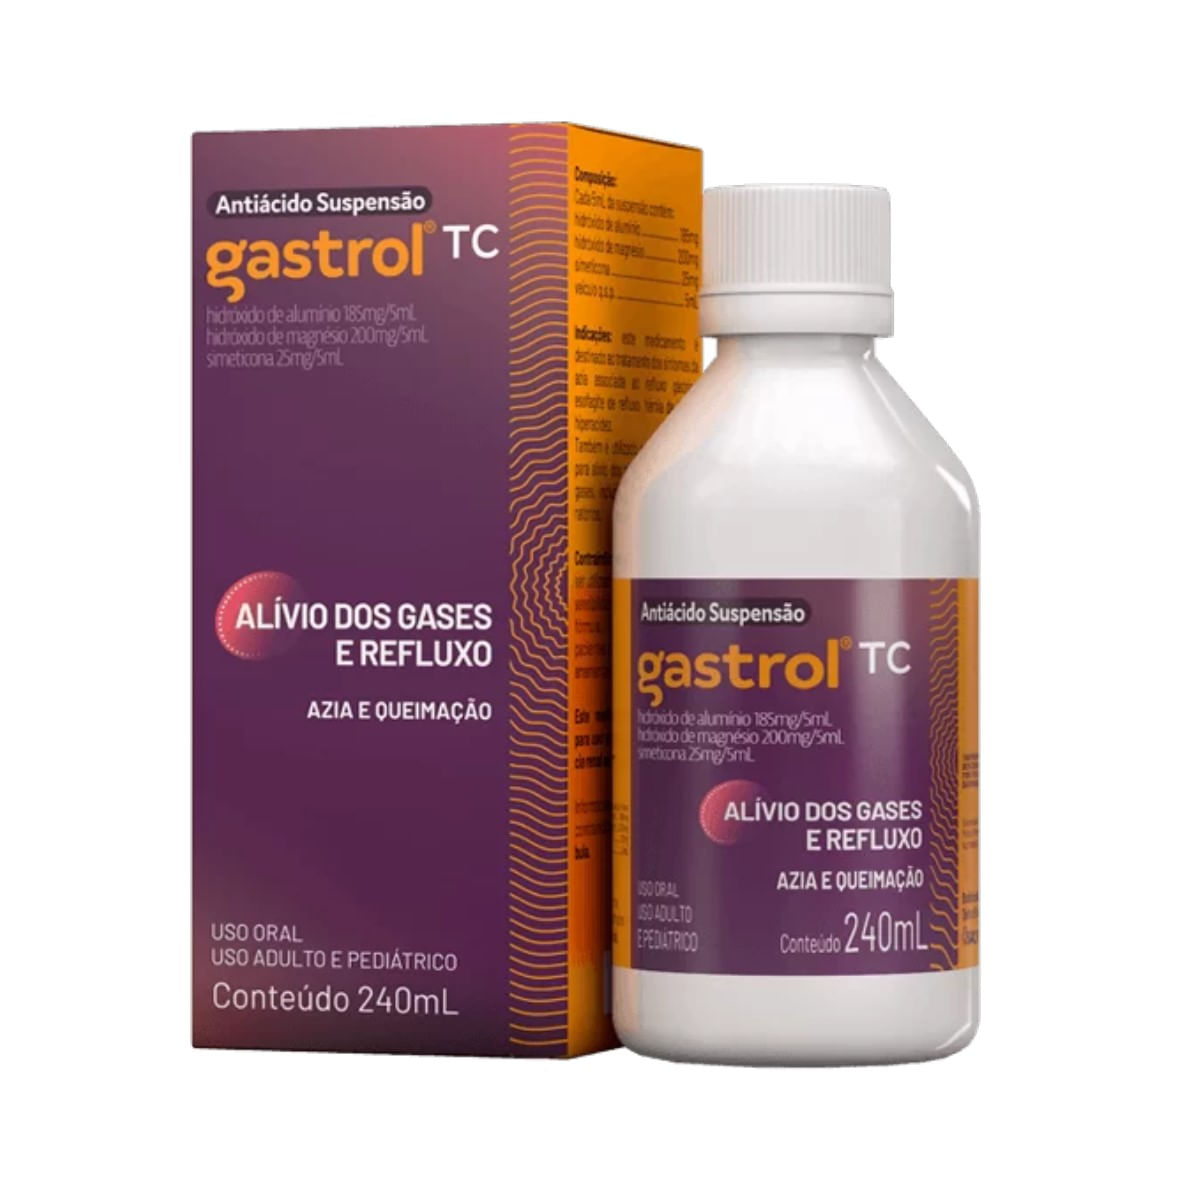 antiacido-suspensao-gastrol-tc-240ml-1.jpg